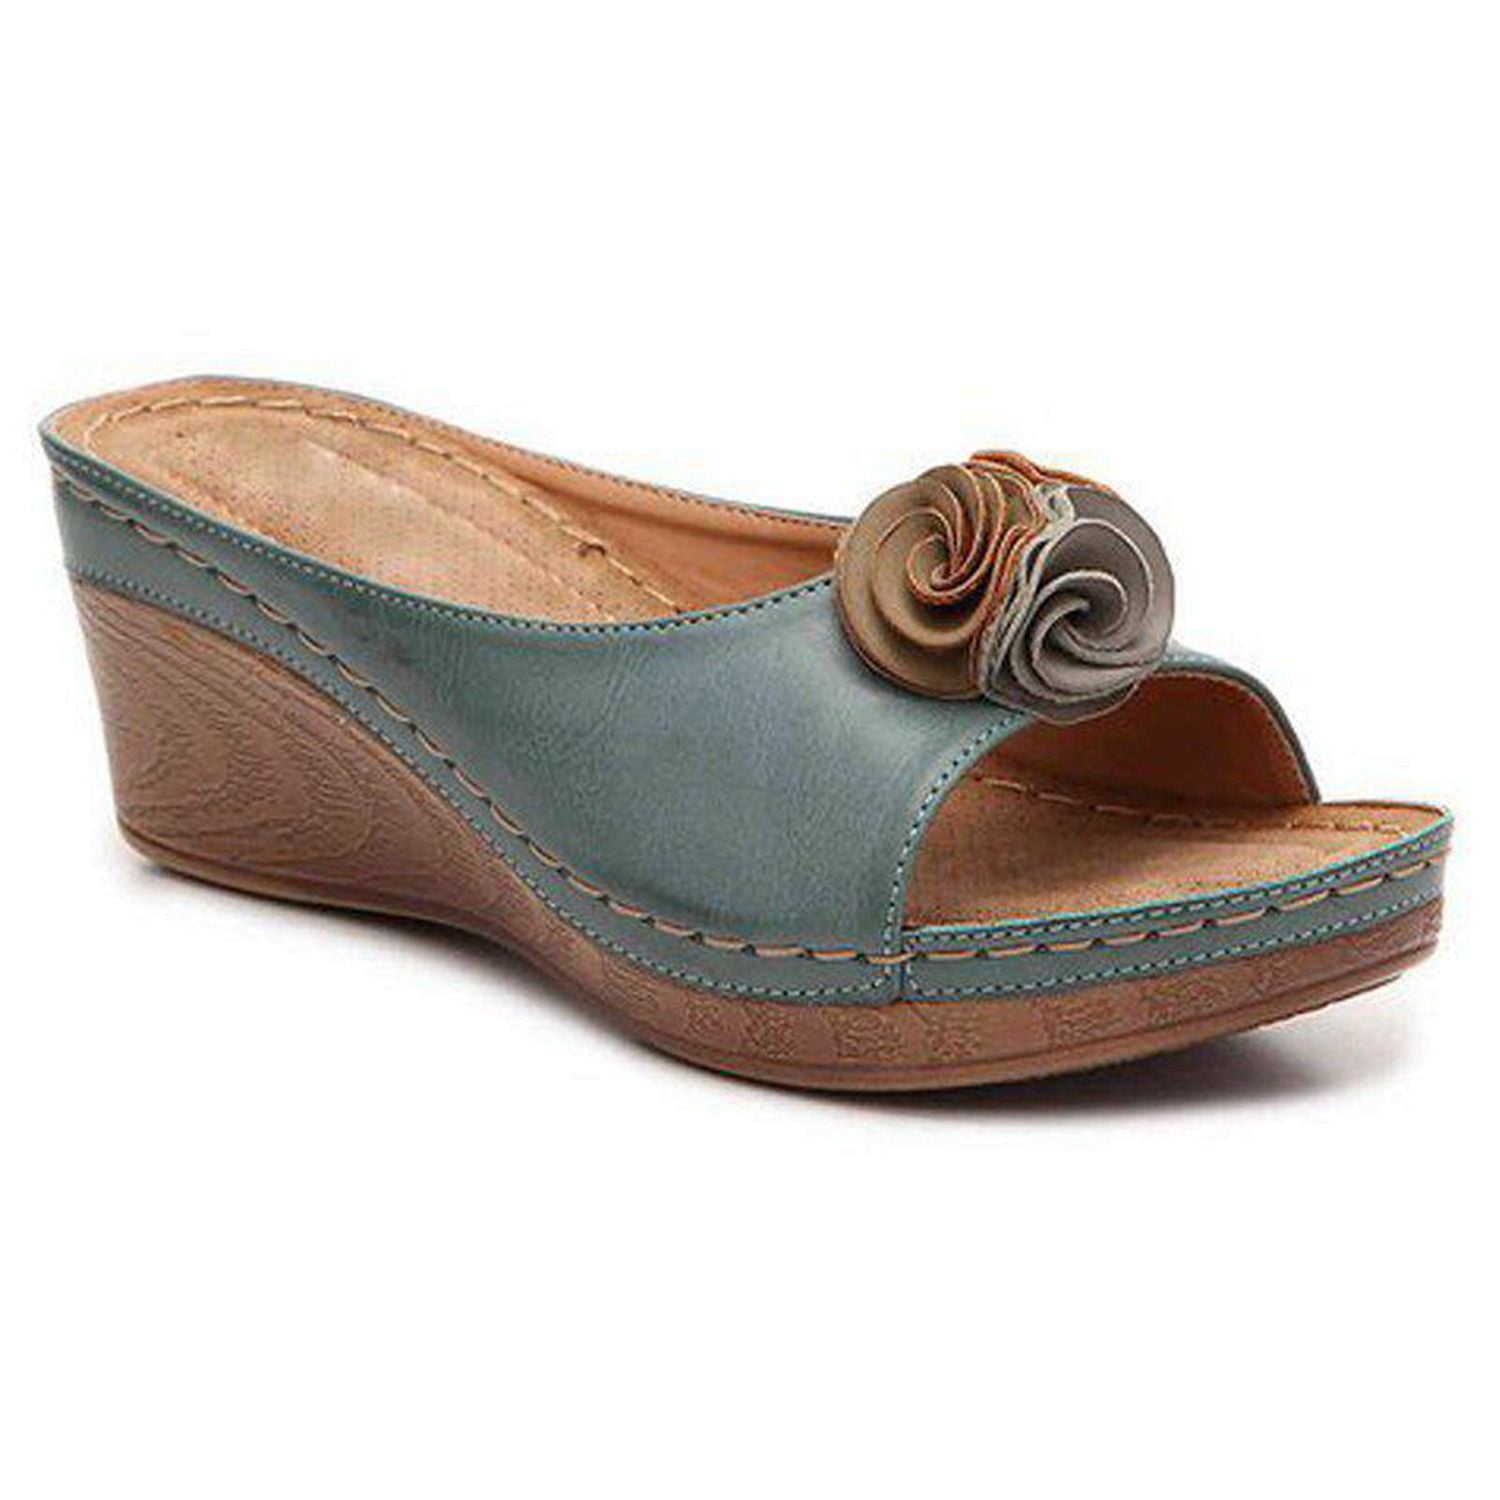 Zoocircle Vintage wedge Sandals Flowers Open Toe Shoes comfortable ...